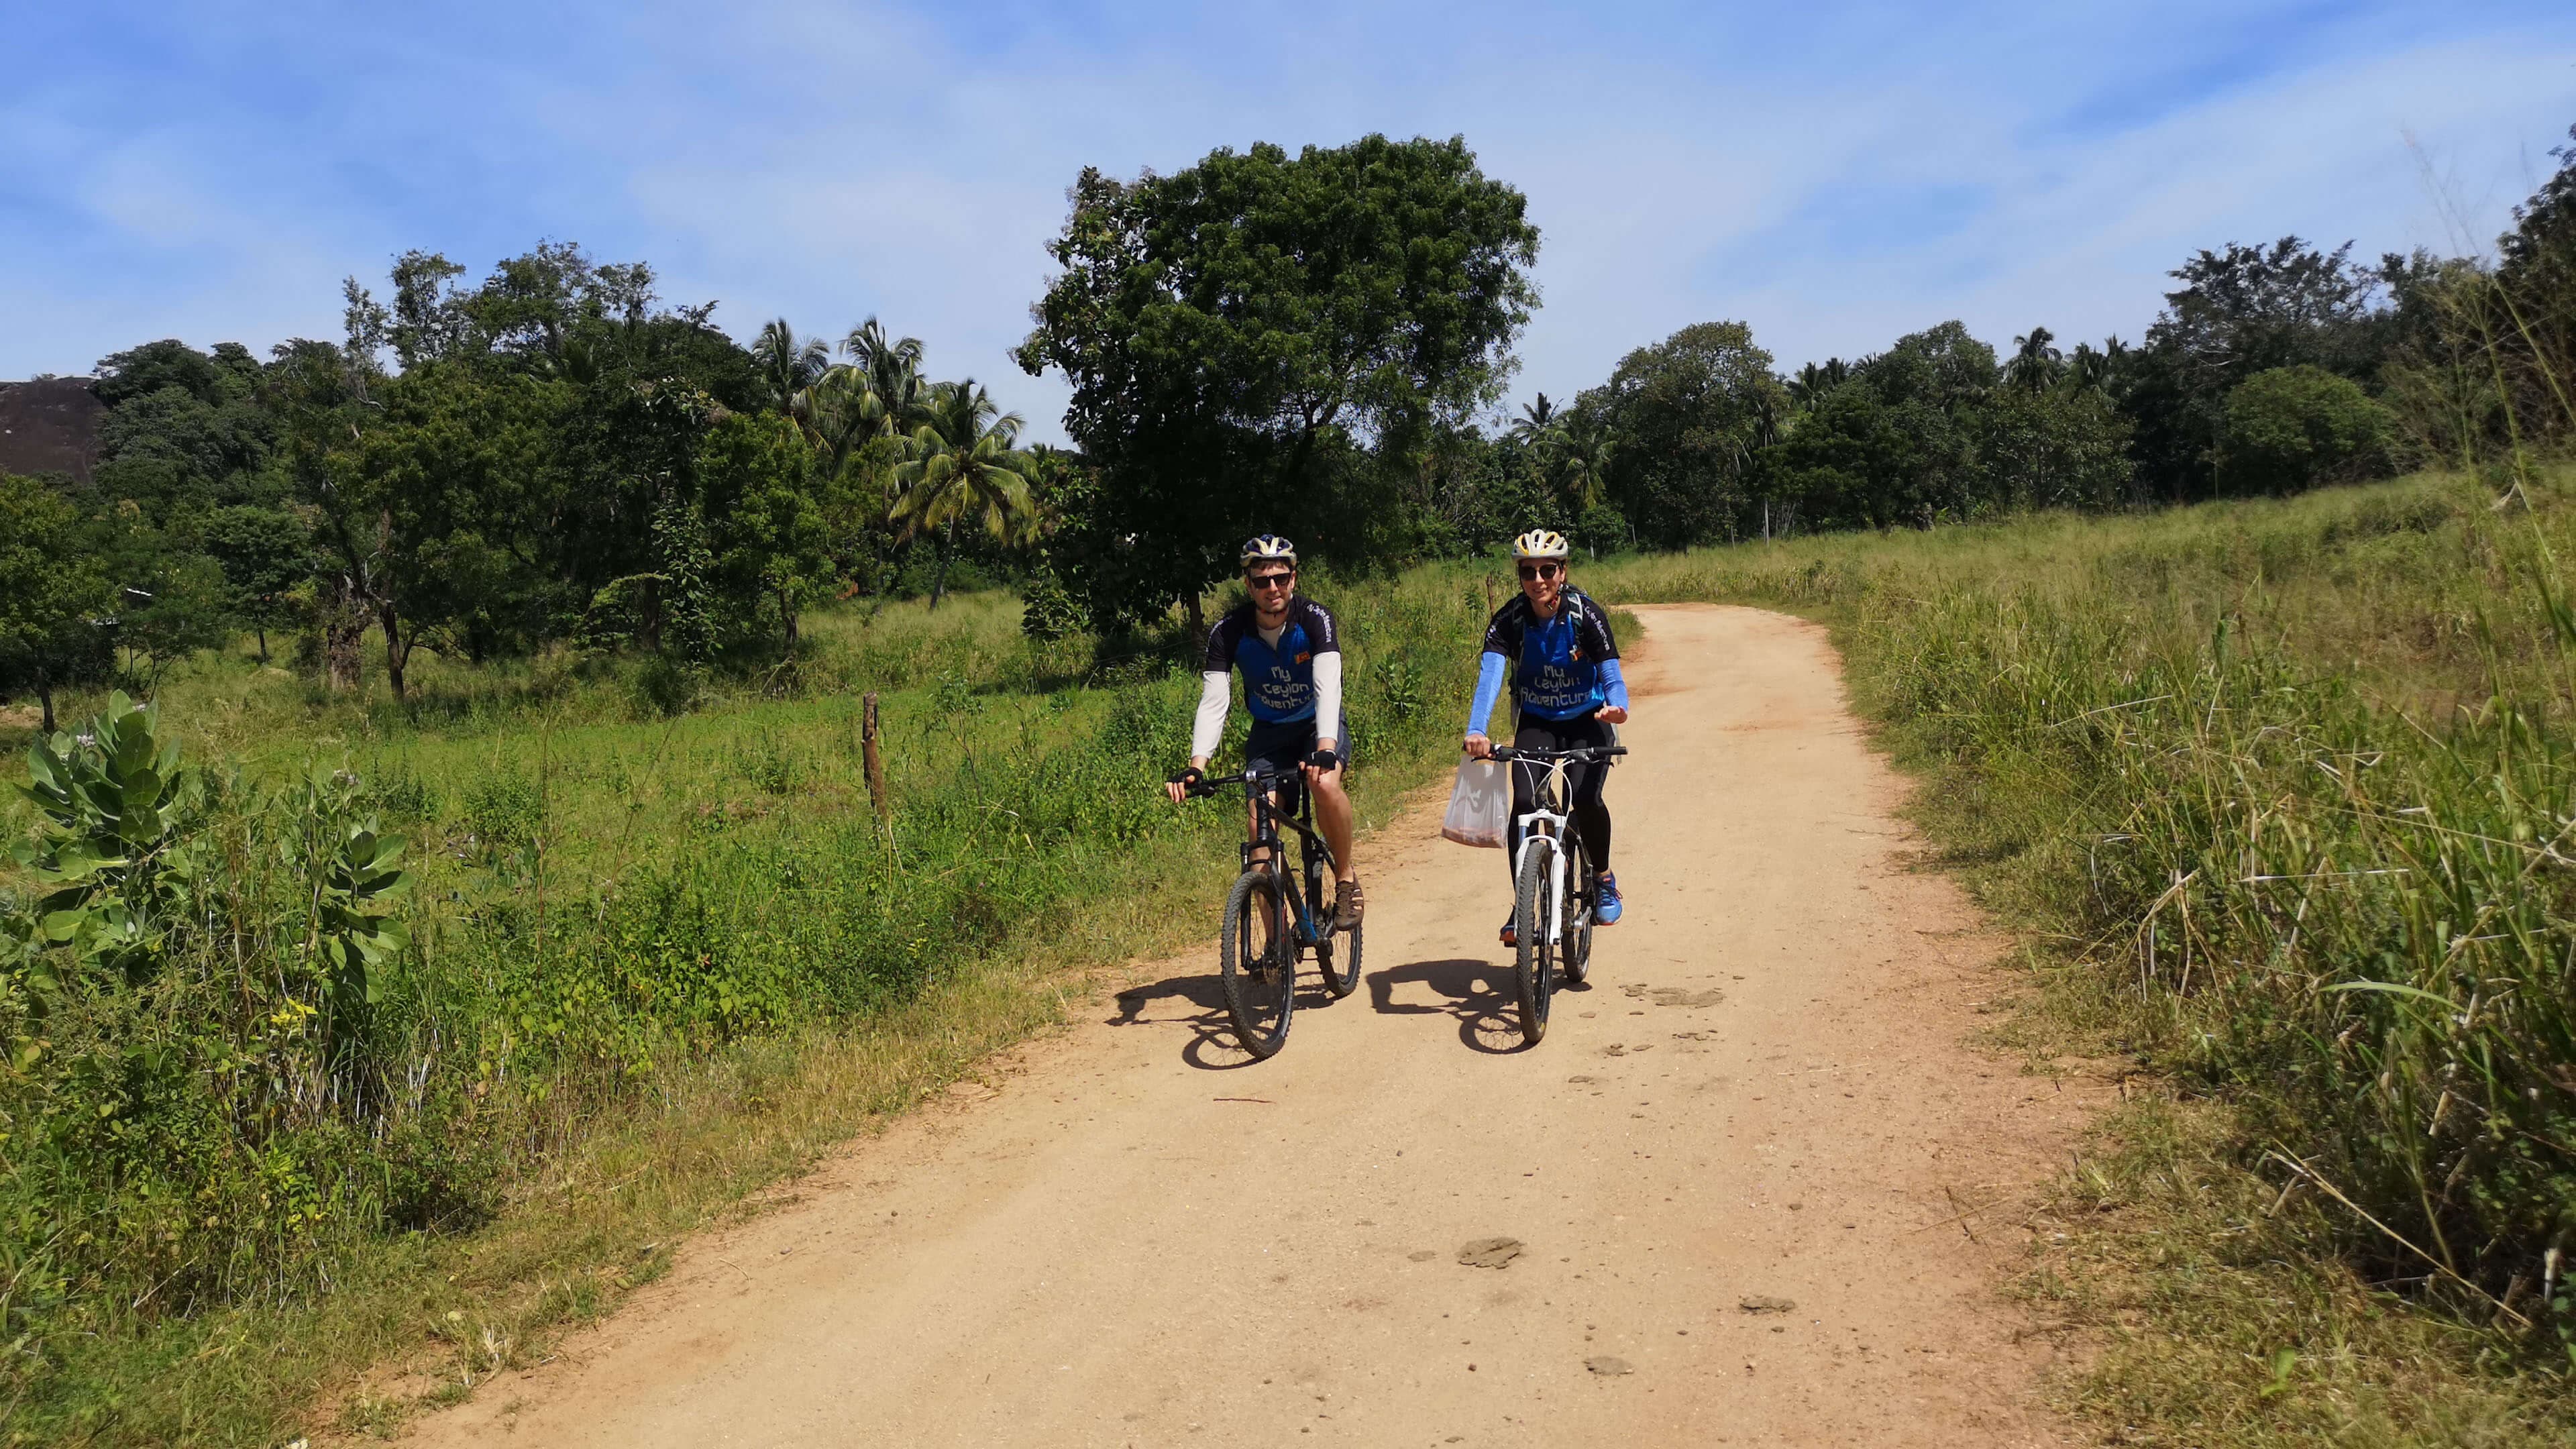 Два велосипедиста едут на велосипеде по засушливой зоне Удавалаве в Шри-Ланке.